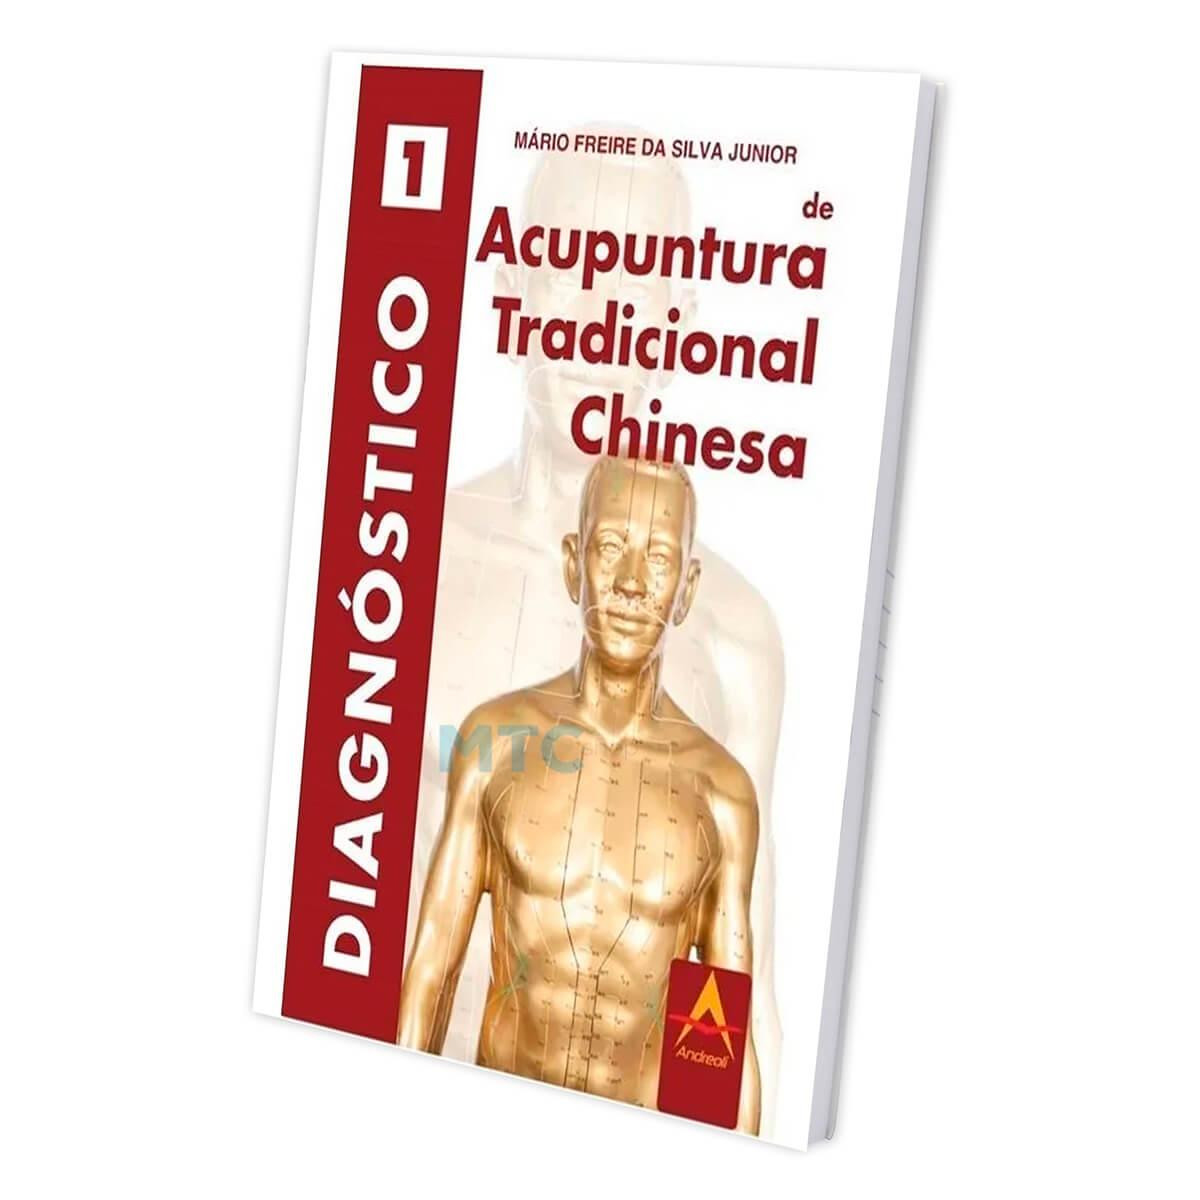 Diagnóstico de Acupuntura Tradicional Chinesa - Vol 1 - Ed Andreoli